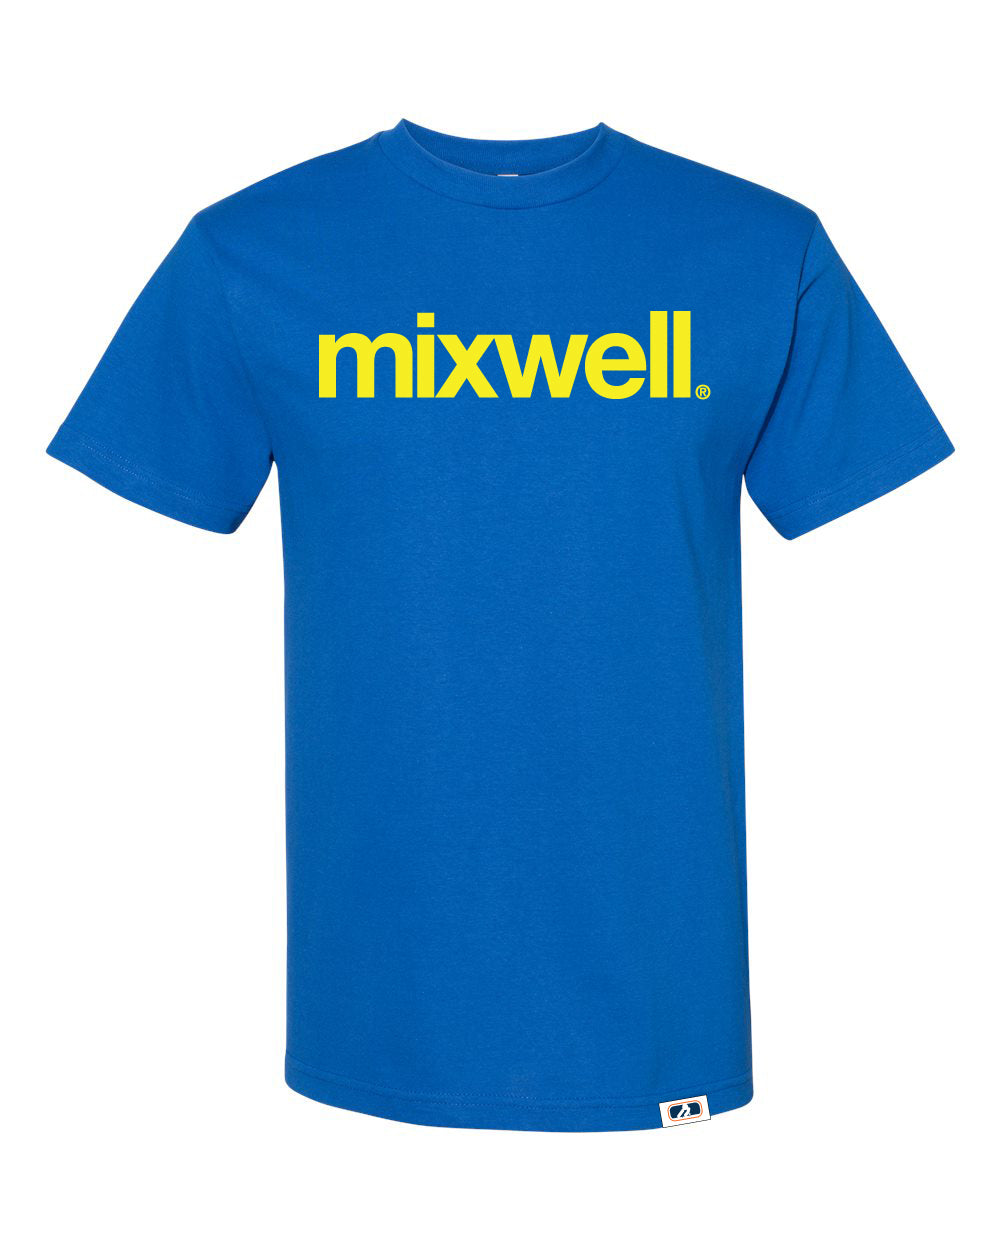 Mixwell web shop – MIXWELL Japan webshop